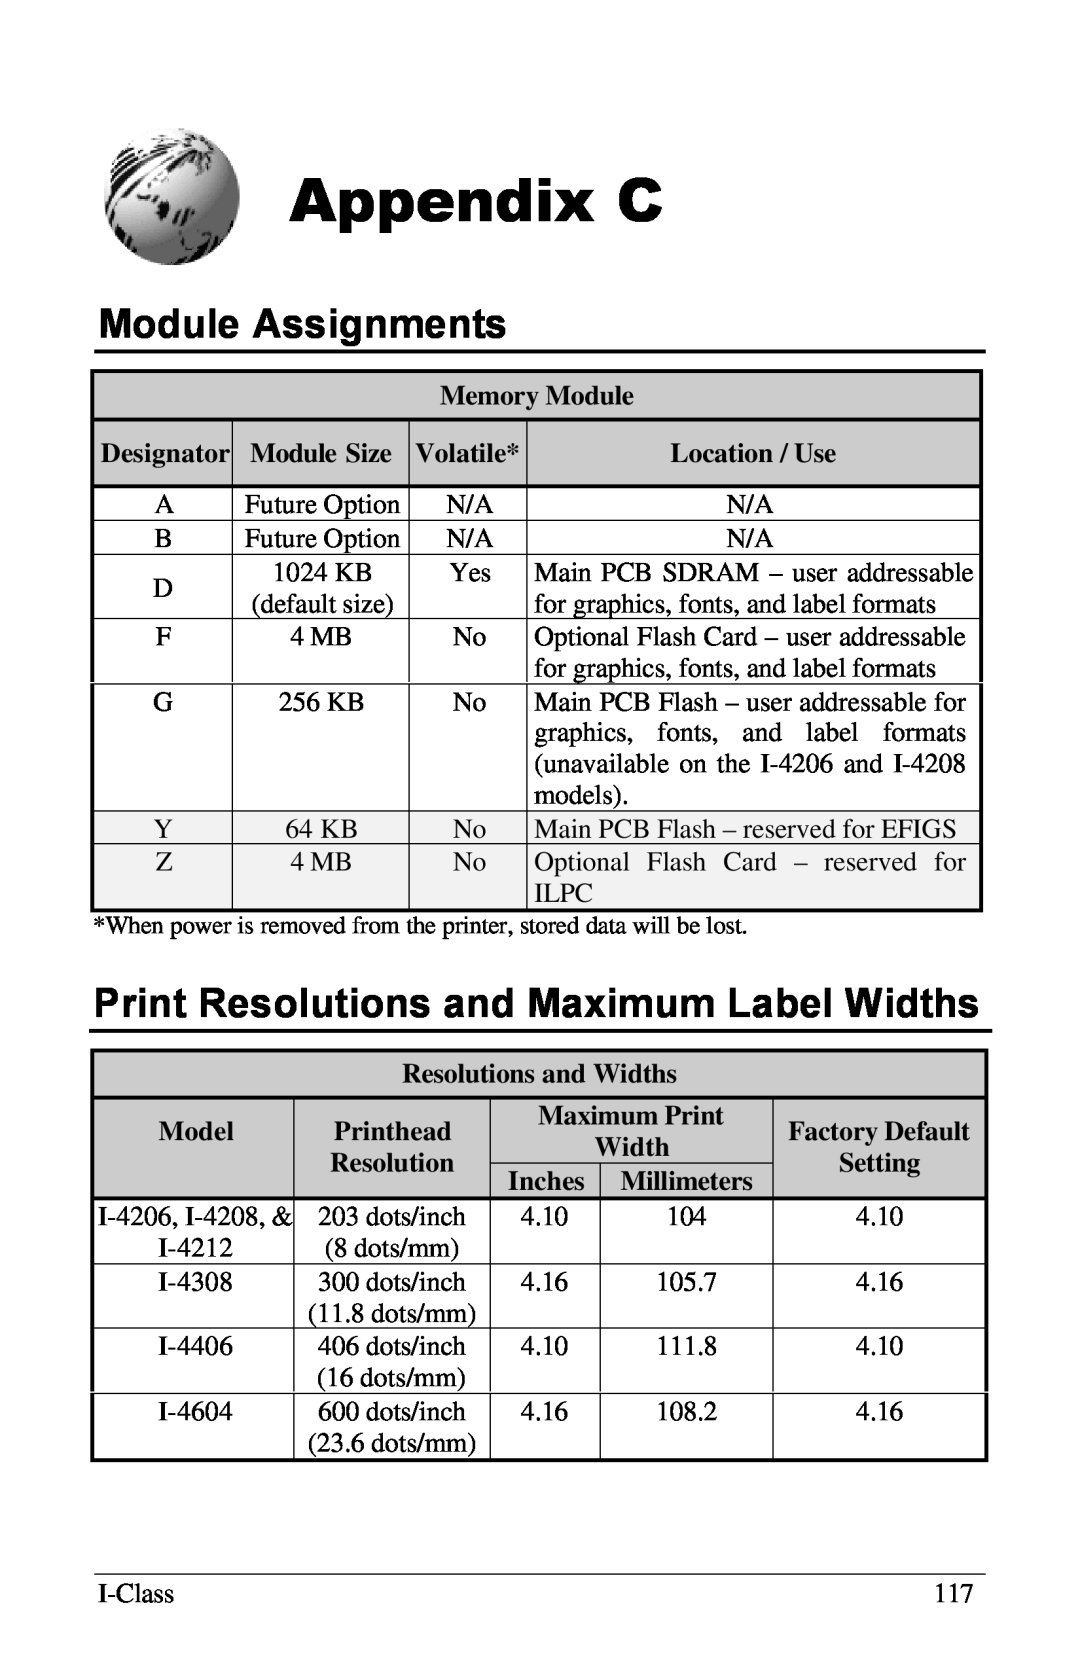 Xerox I Class Appendix C, Module Assignments, Print Resolutions and Maximum Label Widths, Memory Module, Designator, Model 